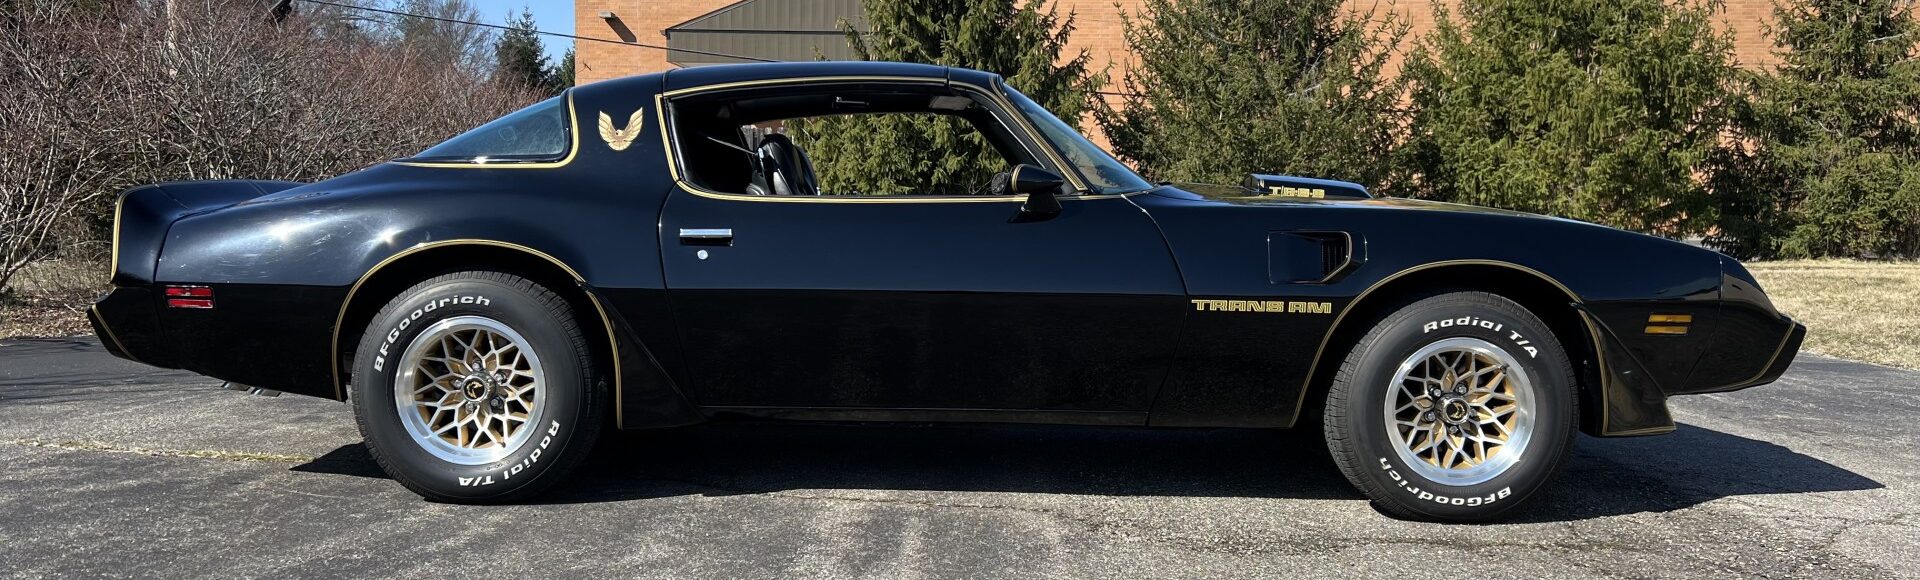 1979 Pontiac TA, Y84 SE, 4 Speed, Restored, Sold!